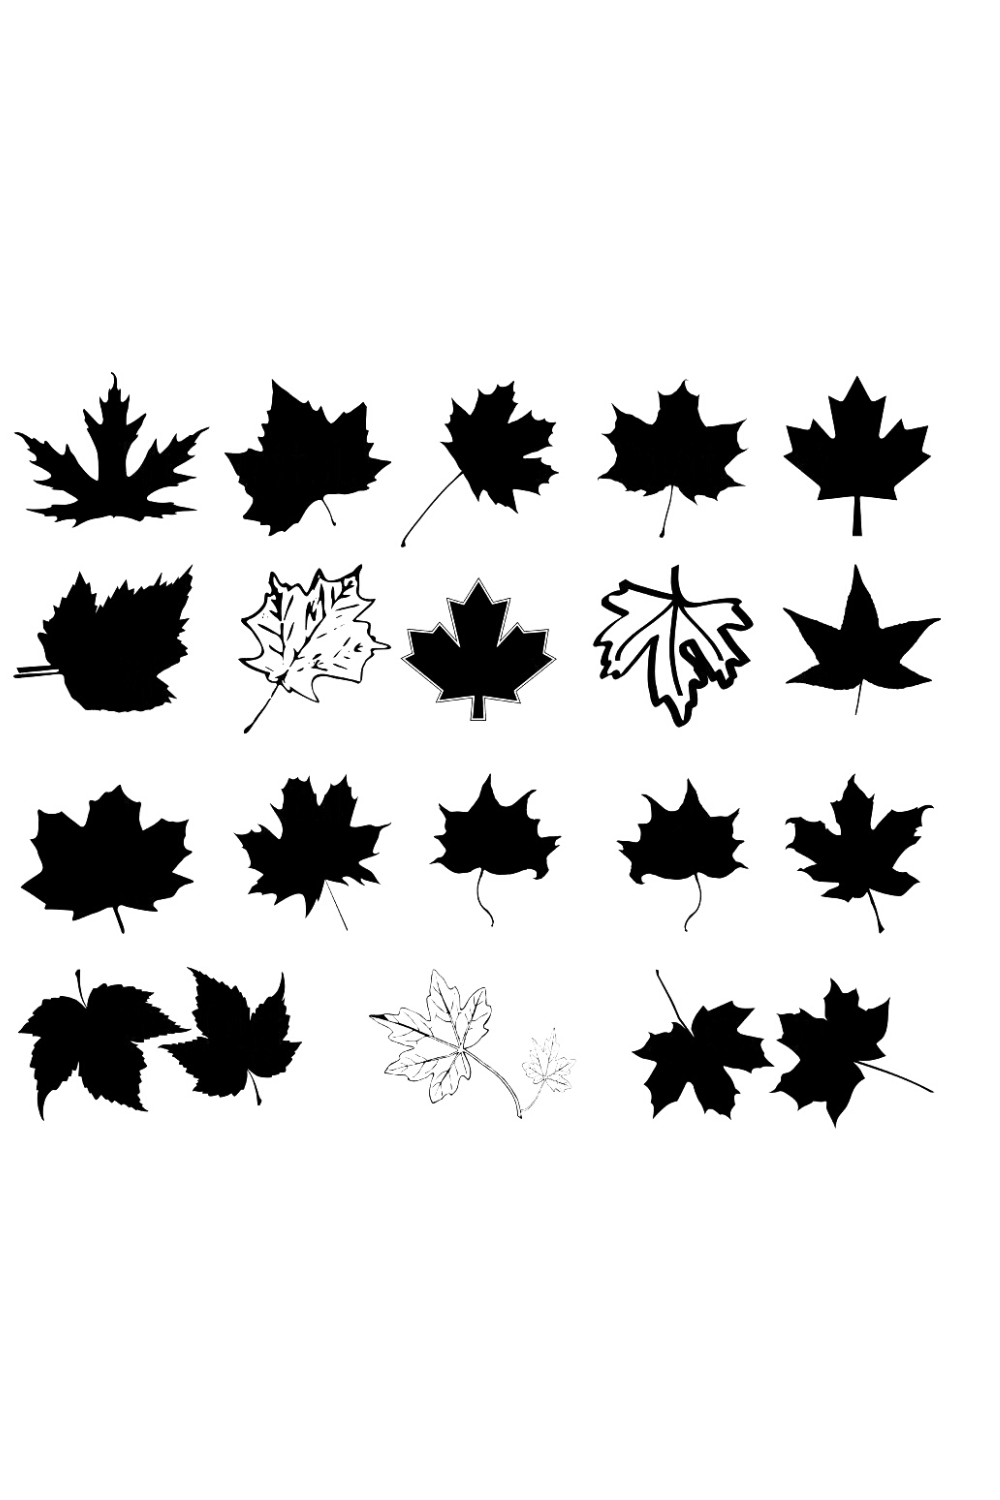 Maple Leaf Silhouette Bundle Pinterest image.